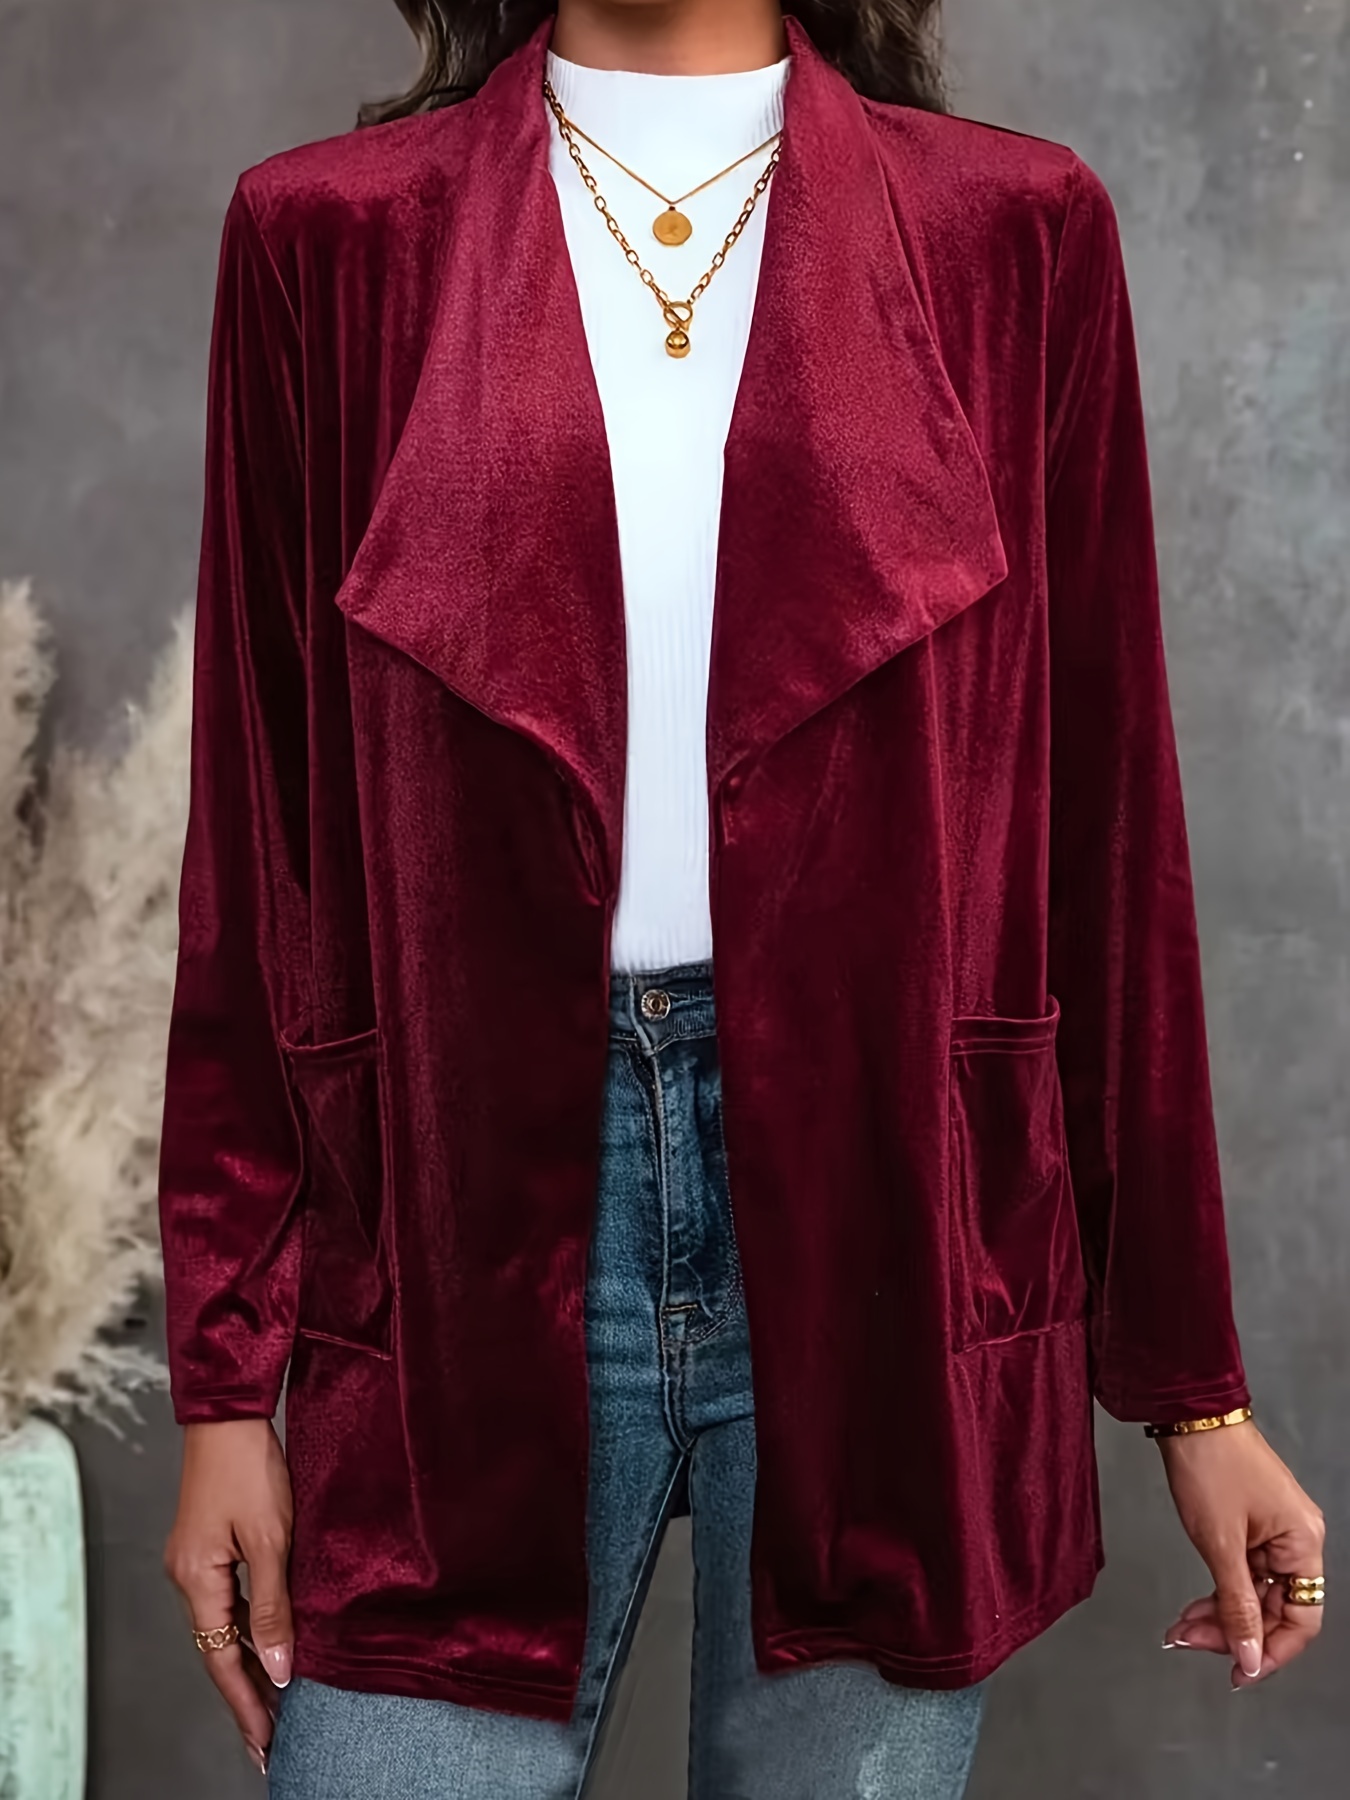 Rseoutlh Women's Long Velvet Cardigan Jacket Casual Open Front